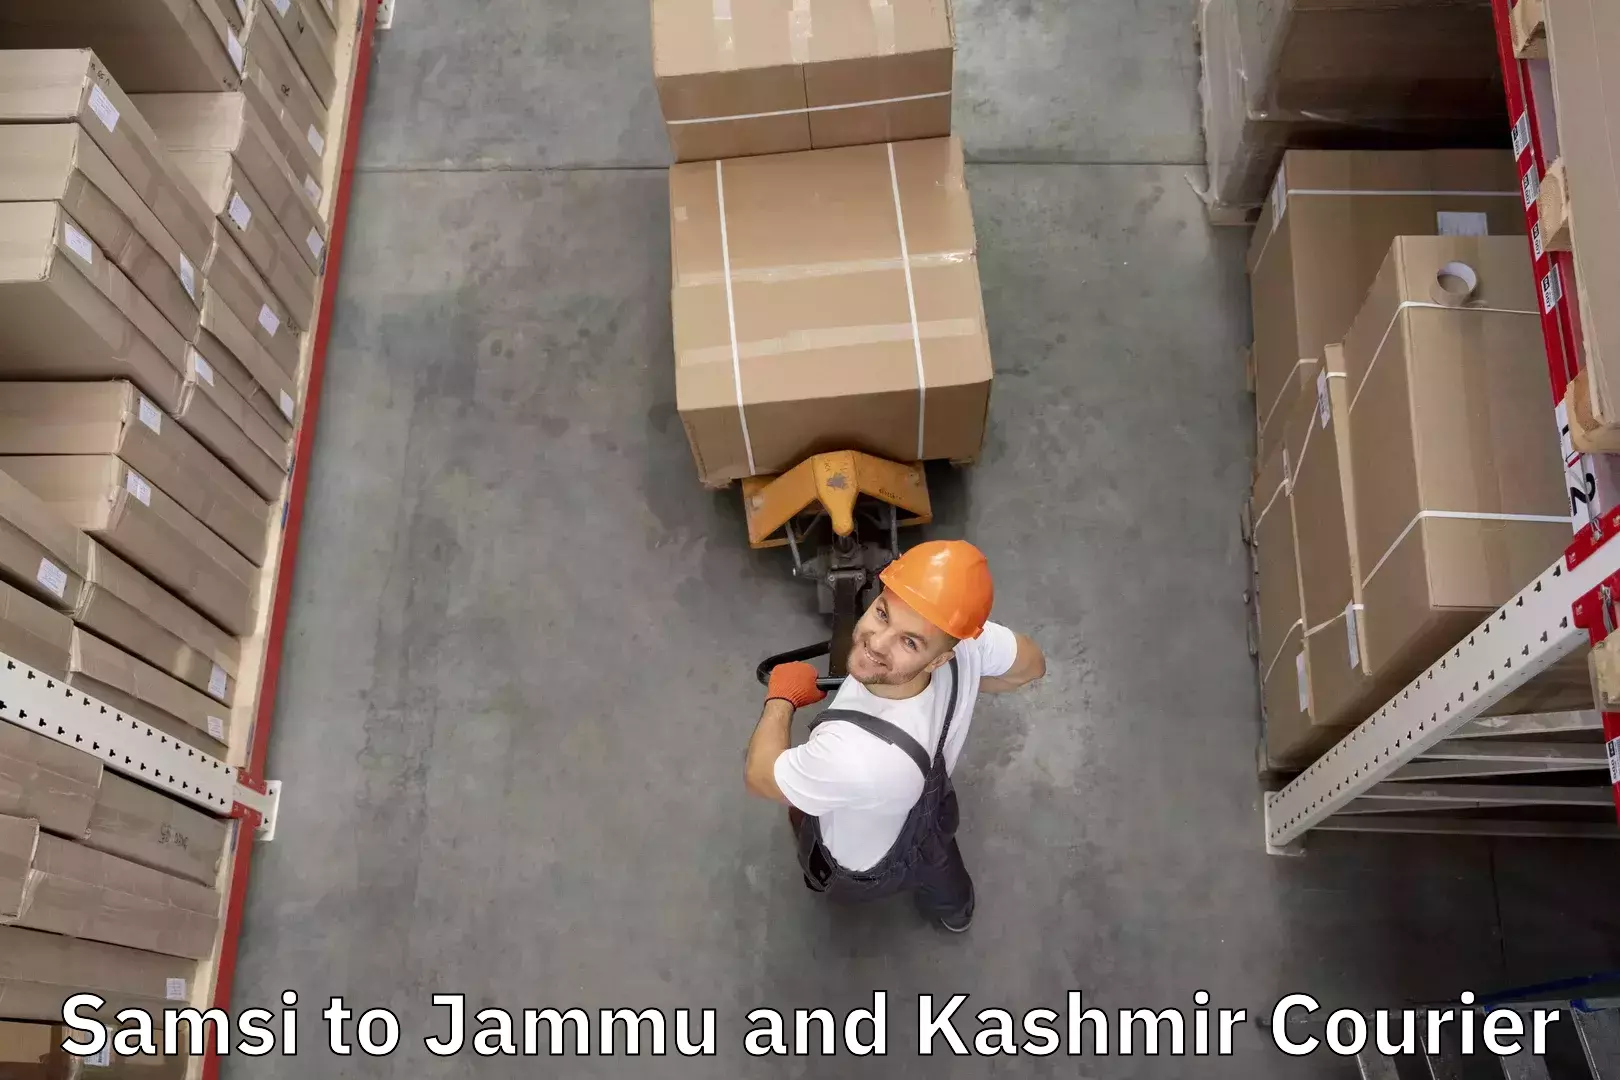 Luggage transport company Samsi to Jammu and Kashmir